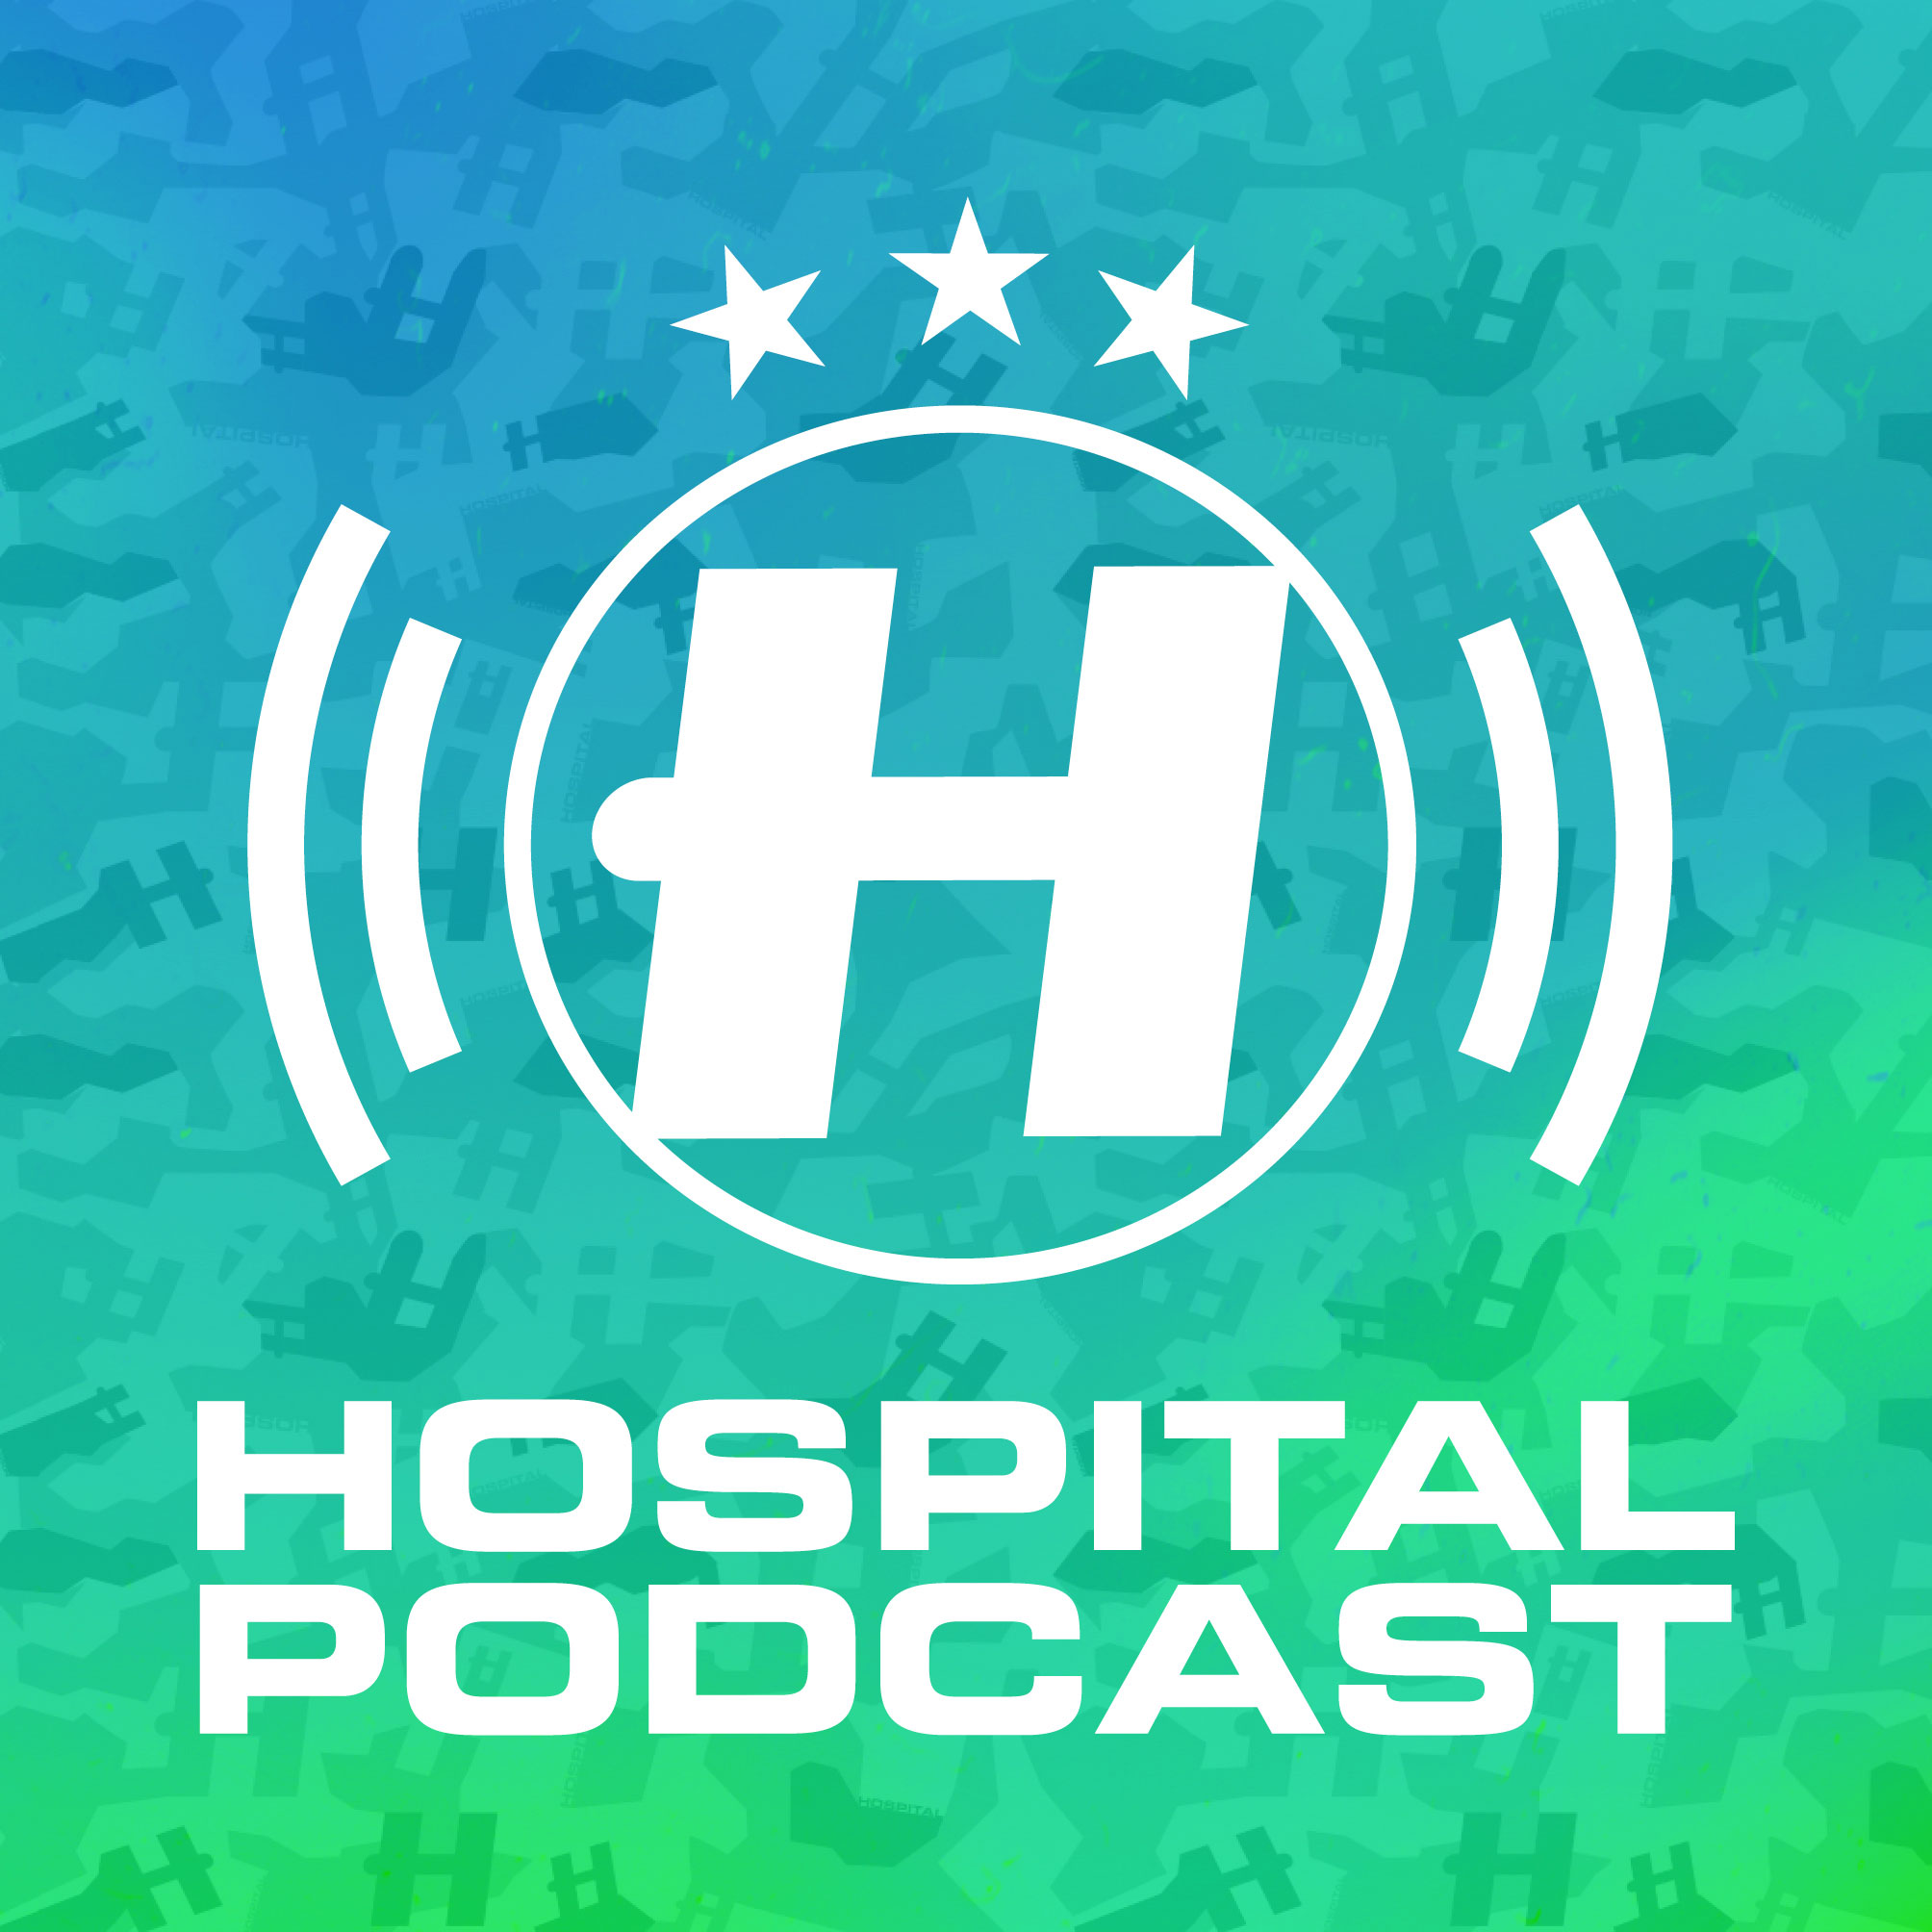 Hospital Podcast 394 with Chris Goss Artwork